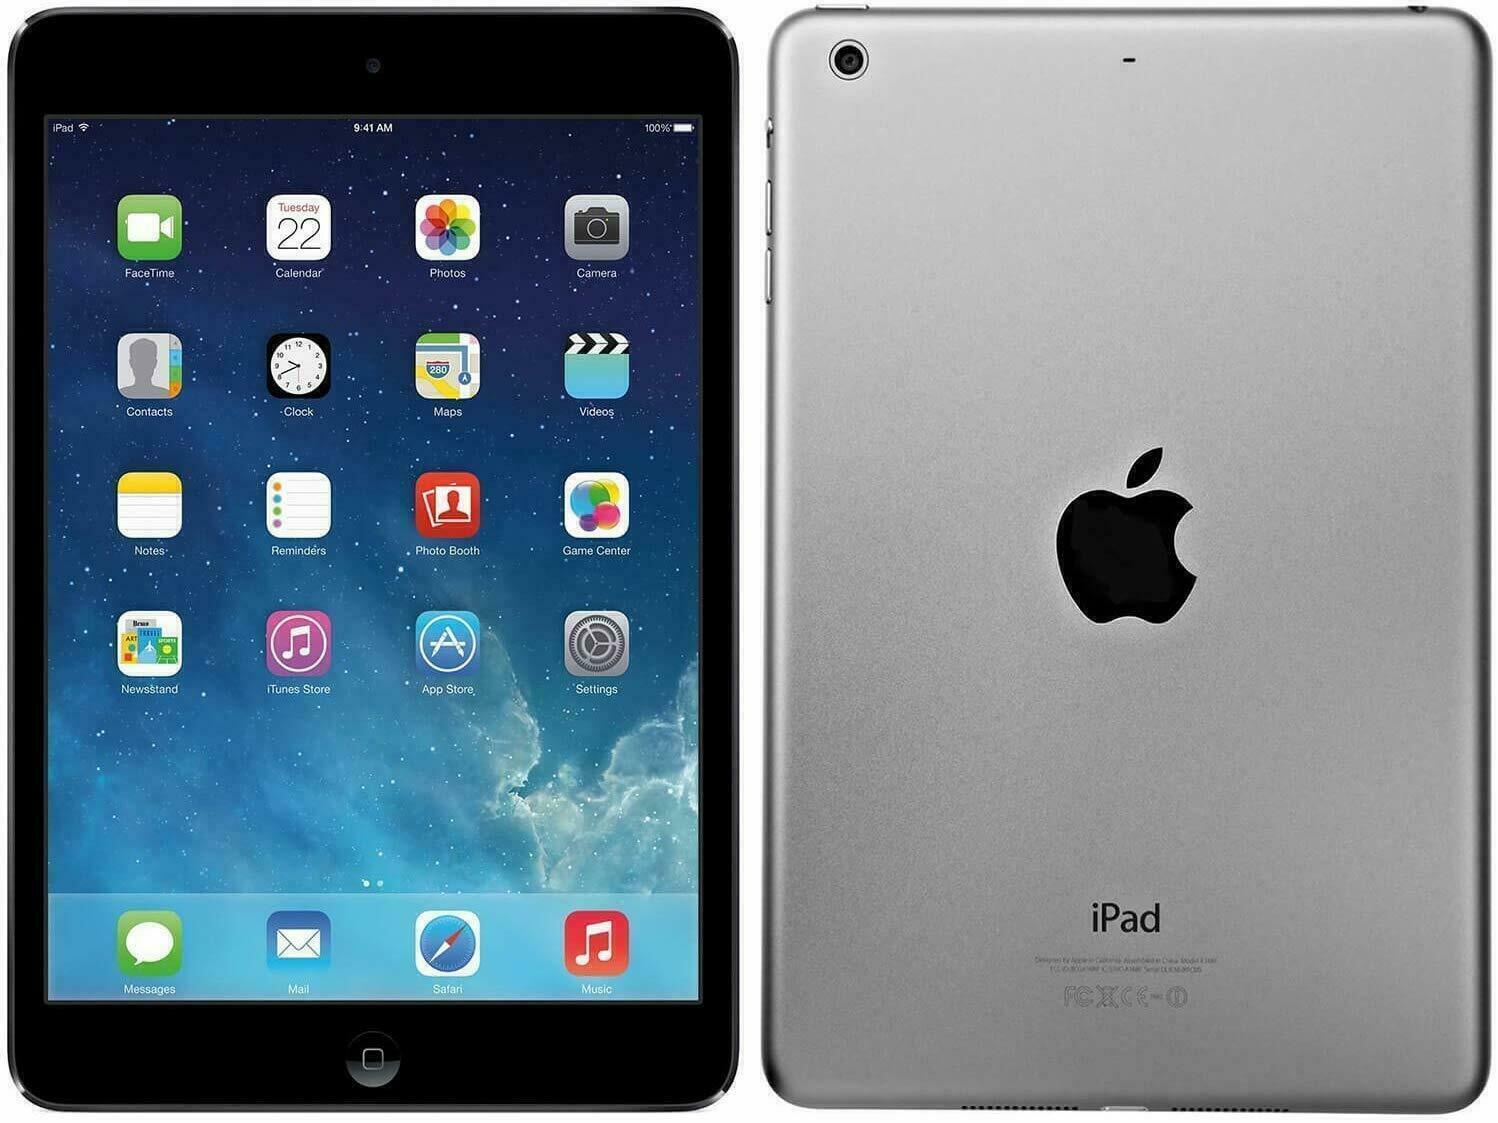 Apple iPad mini A1432 16GB  Wi-Fi 7.9 inch Blue Space Gray Silver - Excellent